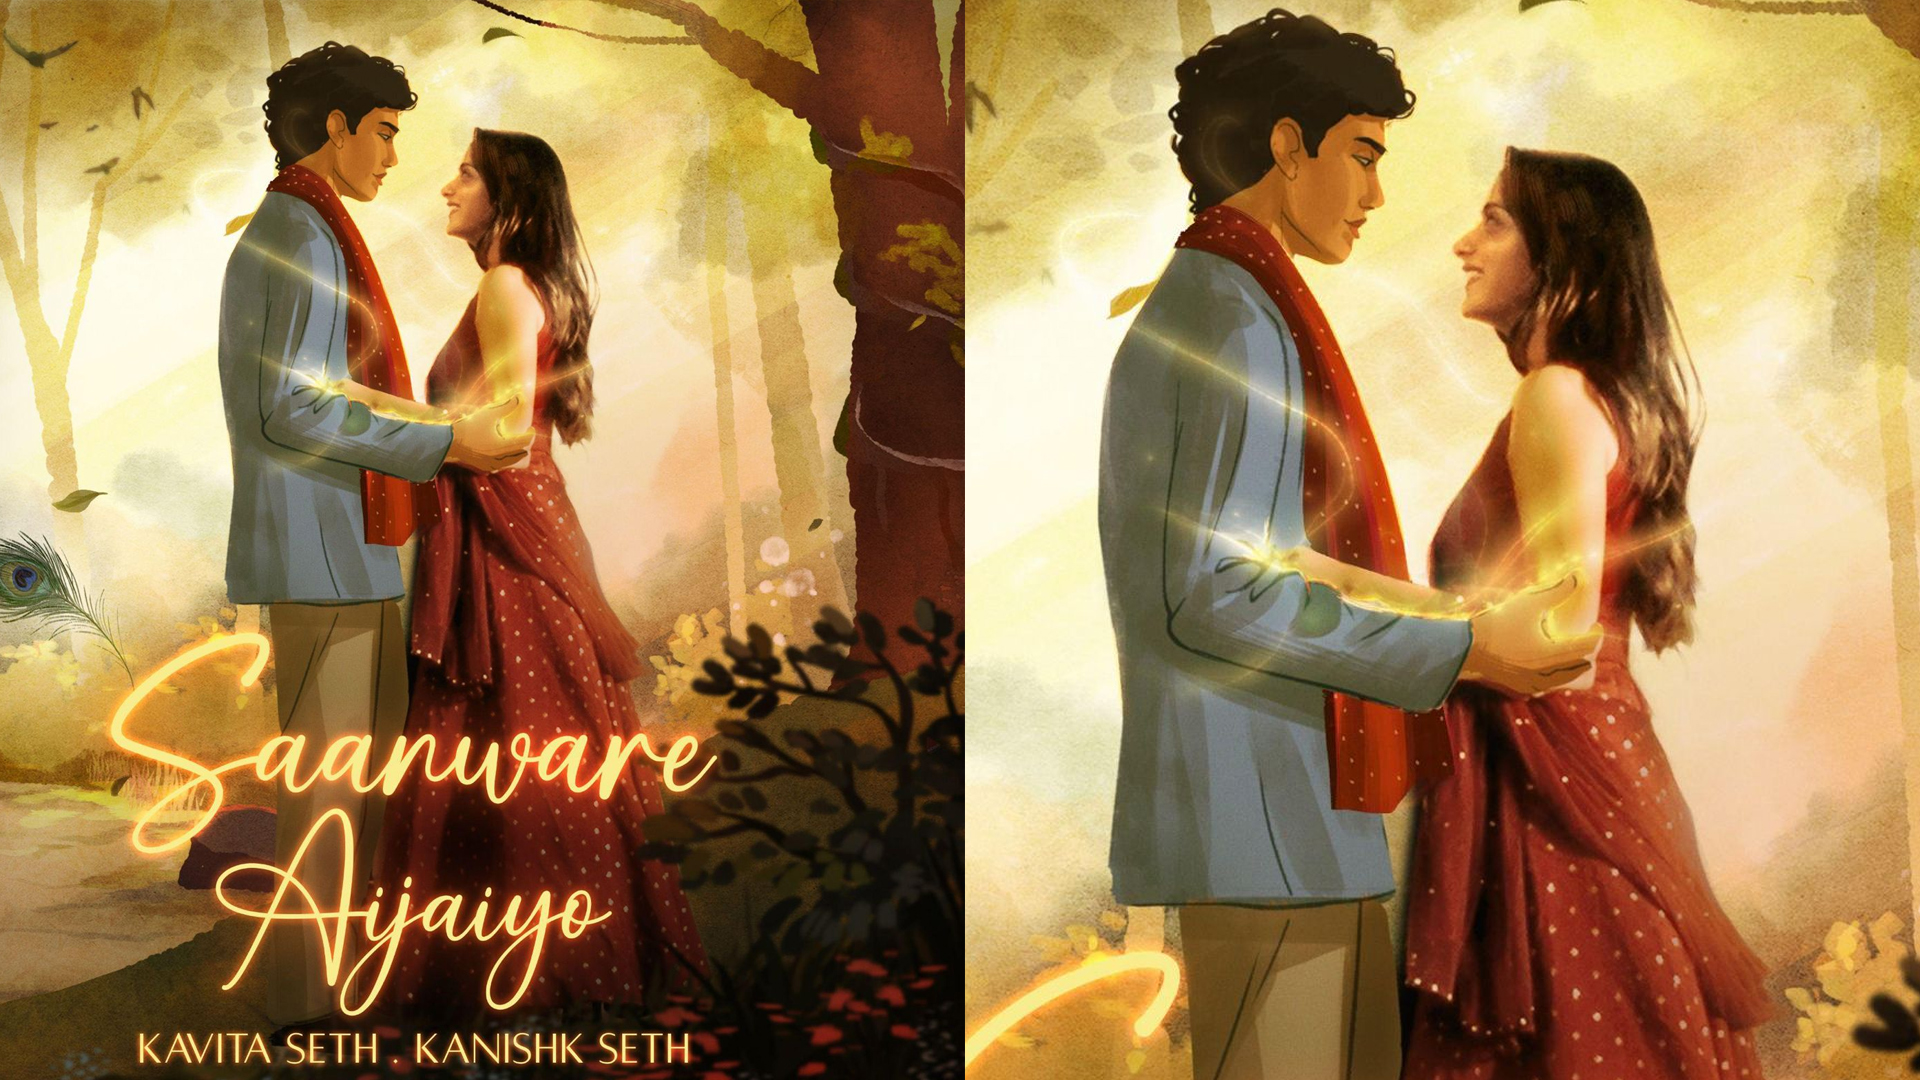 Janmashtami Special: ‘Saanware Aijaiyo’ by Kavita Seth and Kanishk Seth, A Musical Tribute Arrives on September 14th